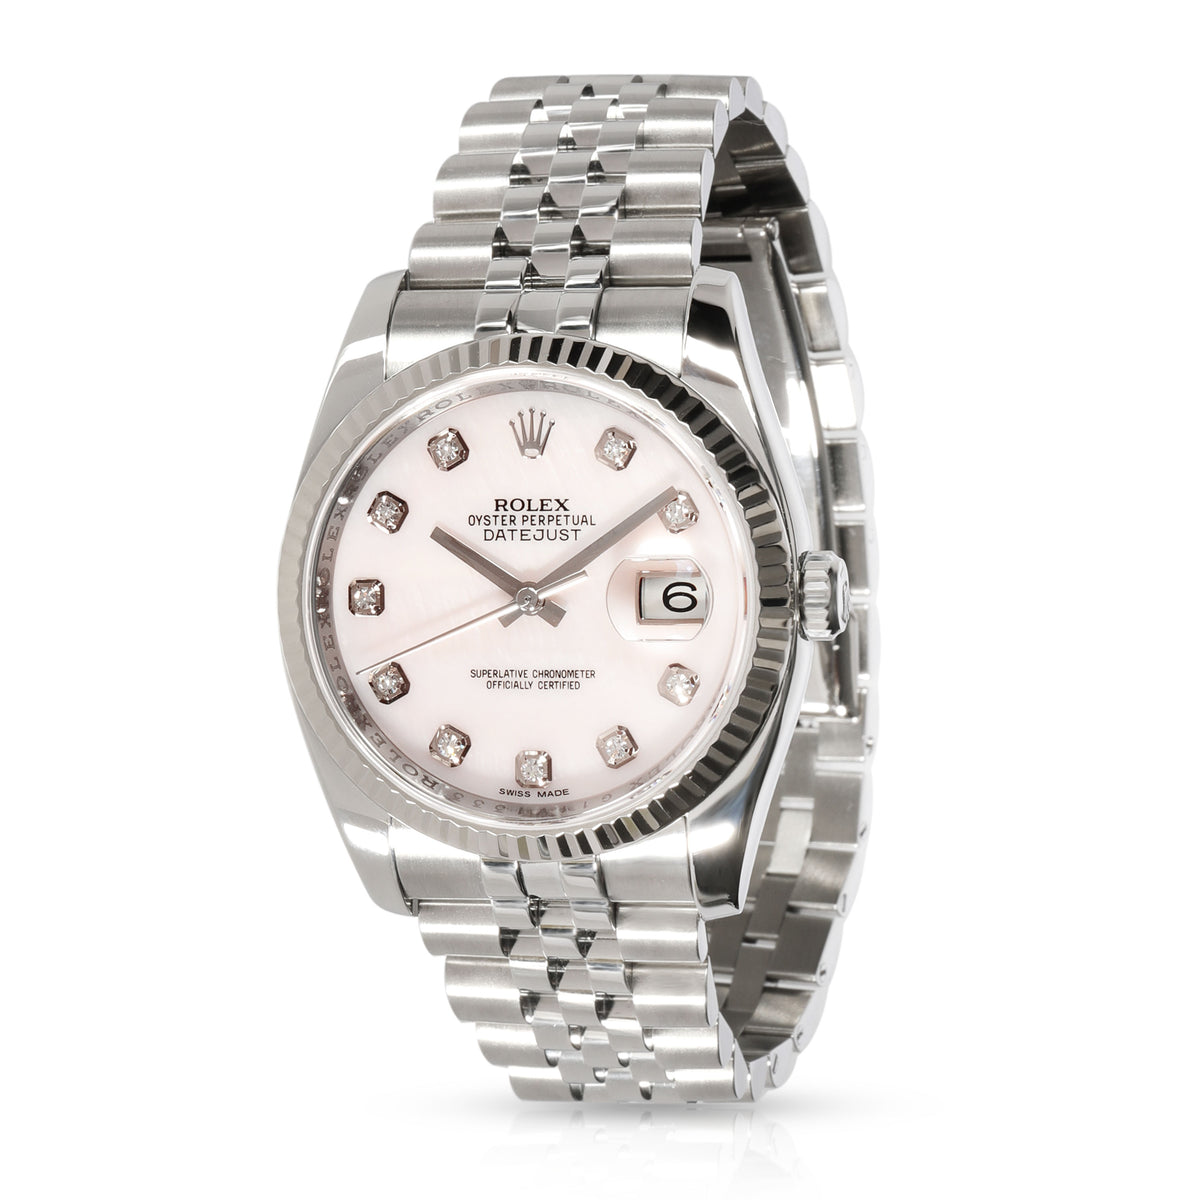 Rolex Datejust 116234 Men's Watch in 18kt Stainless Steel/White Gold